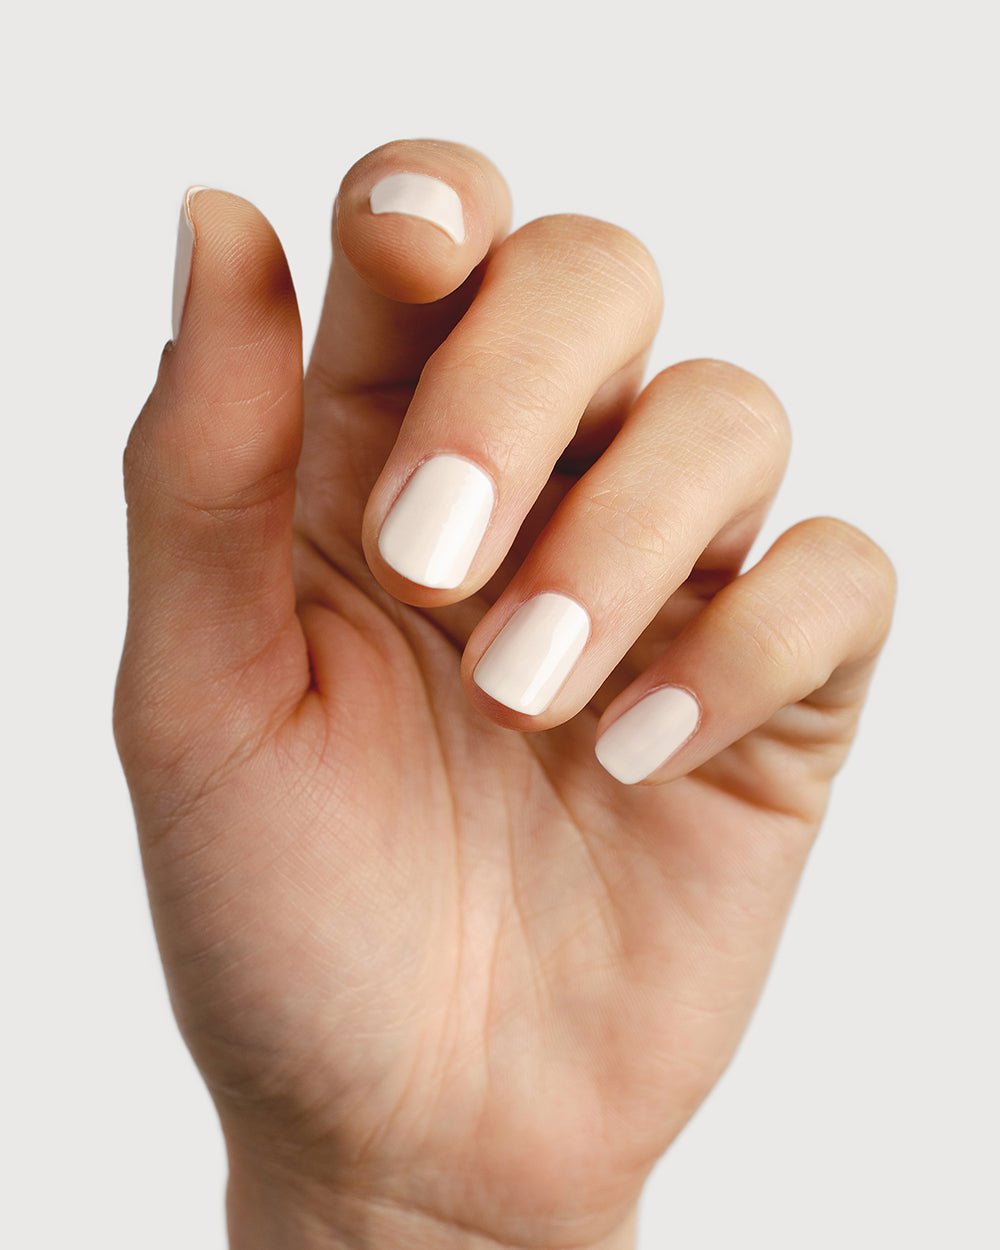 Eggshell white nail polish hand swatch on fair skin tone